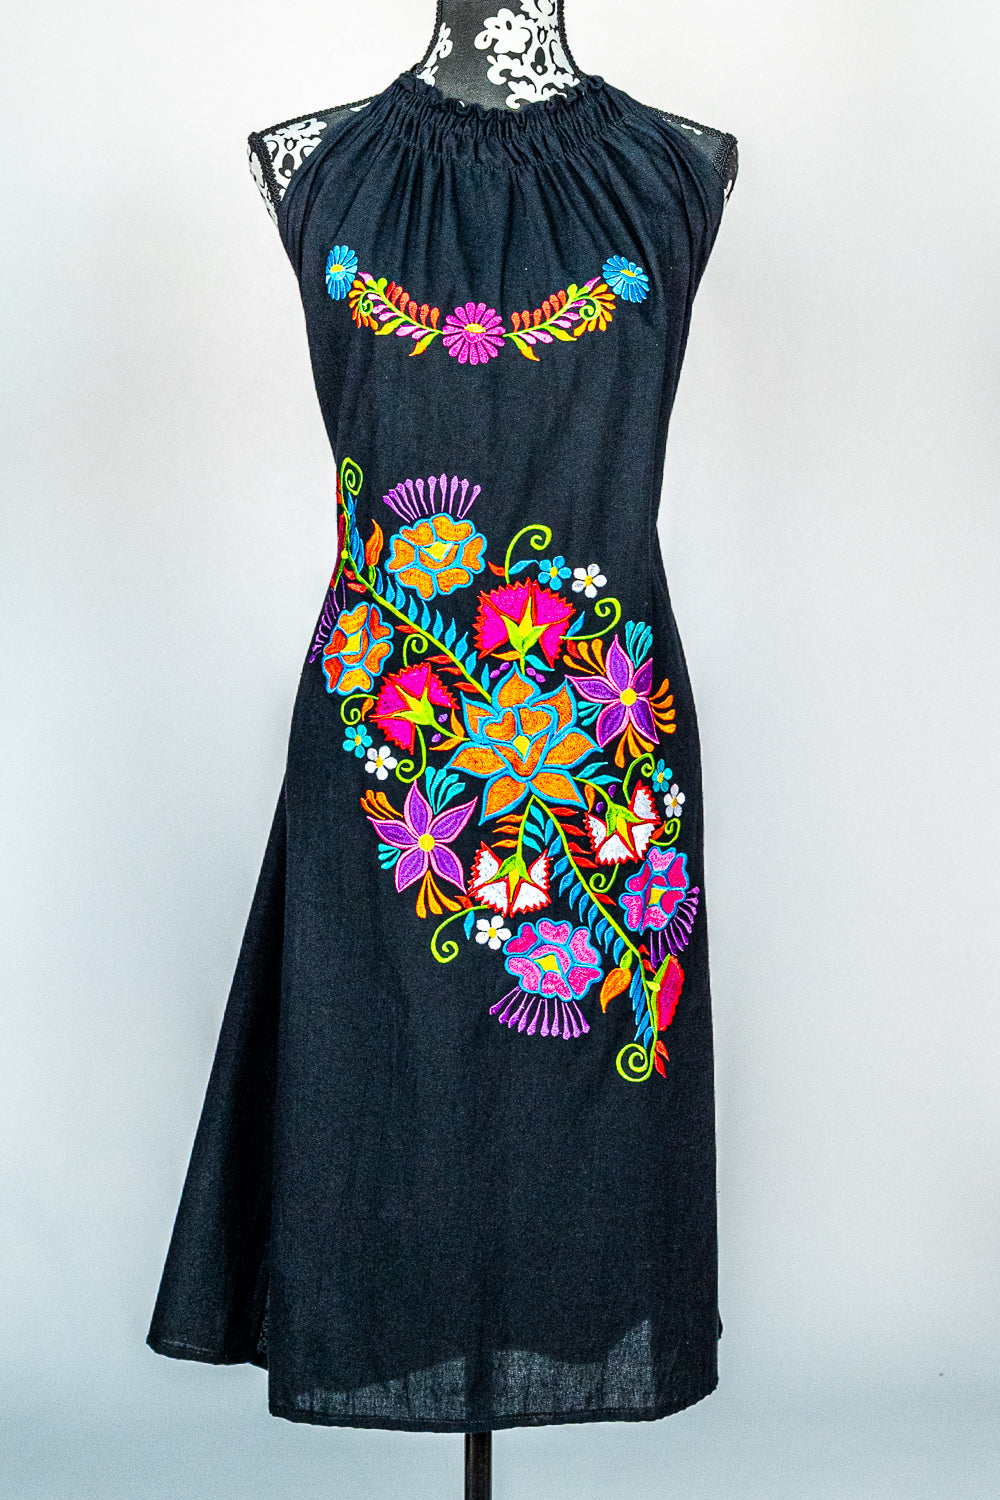 Black multi colored halter embroidered dress